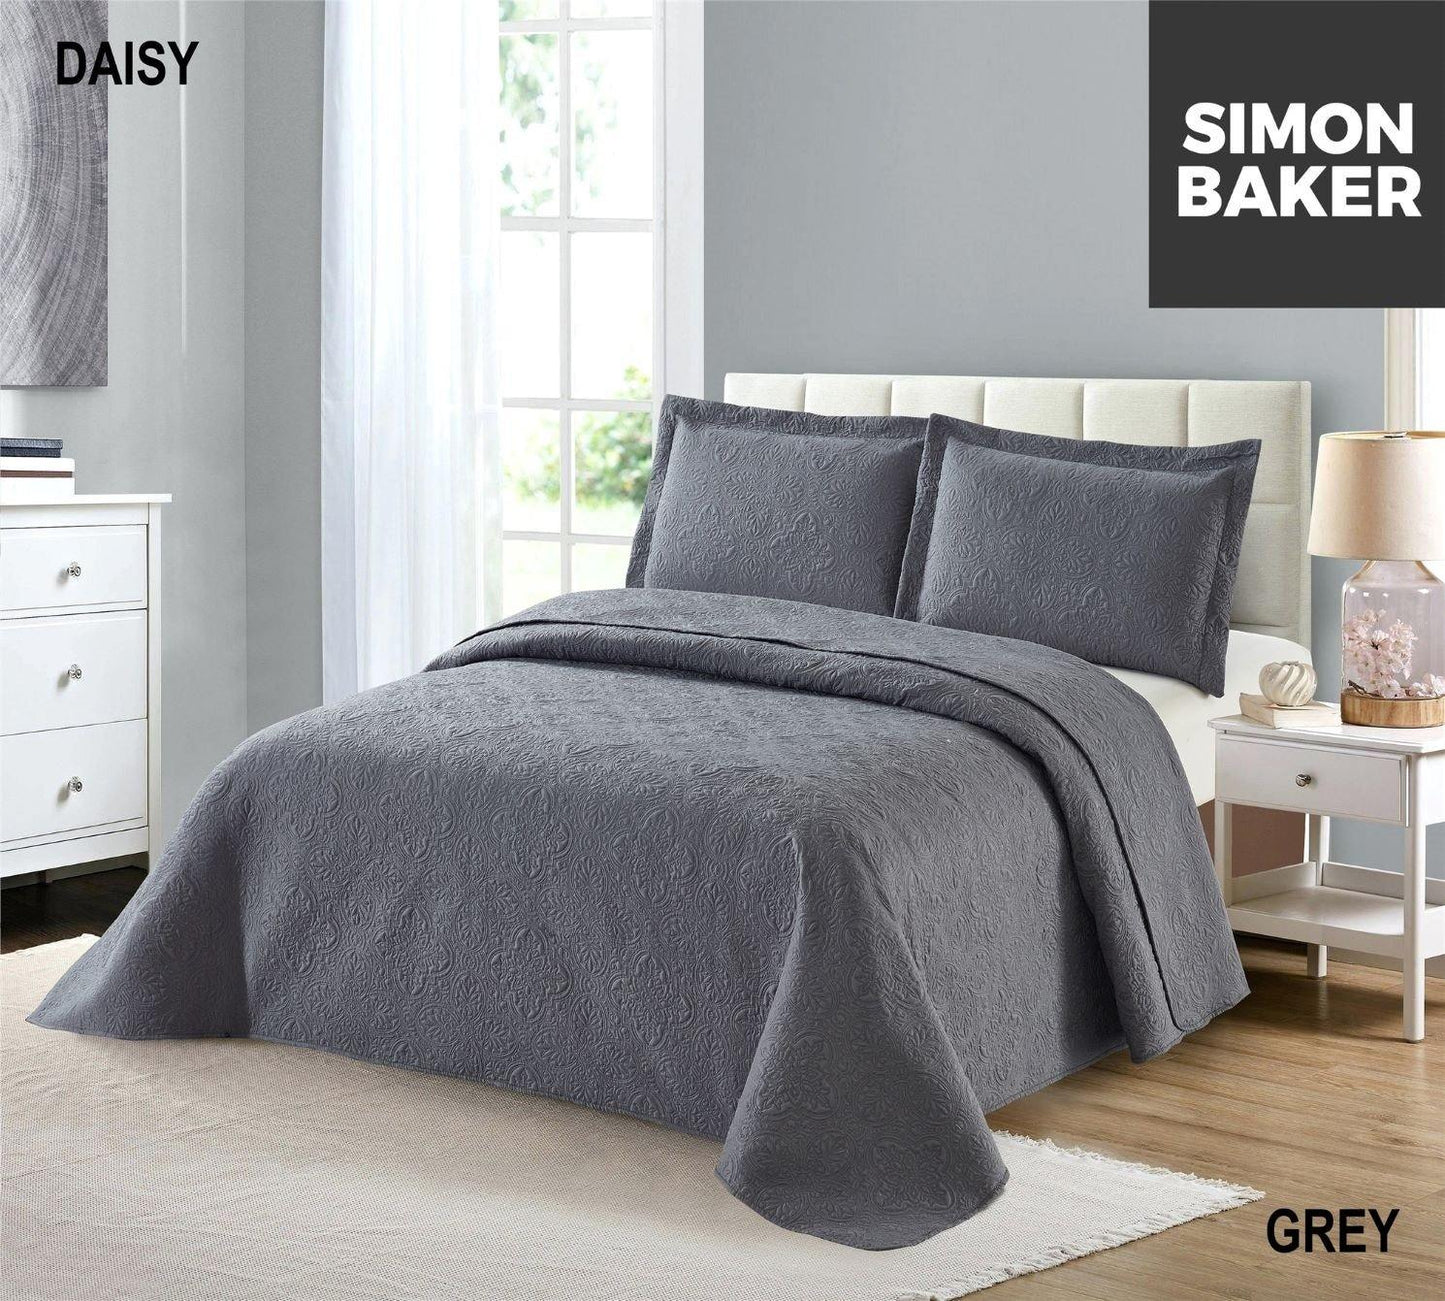 Simon Baker | Daisy Bedspread Grey (Various Sizes)